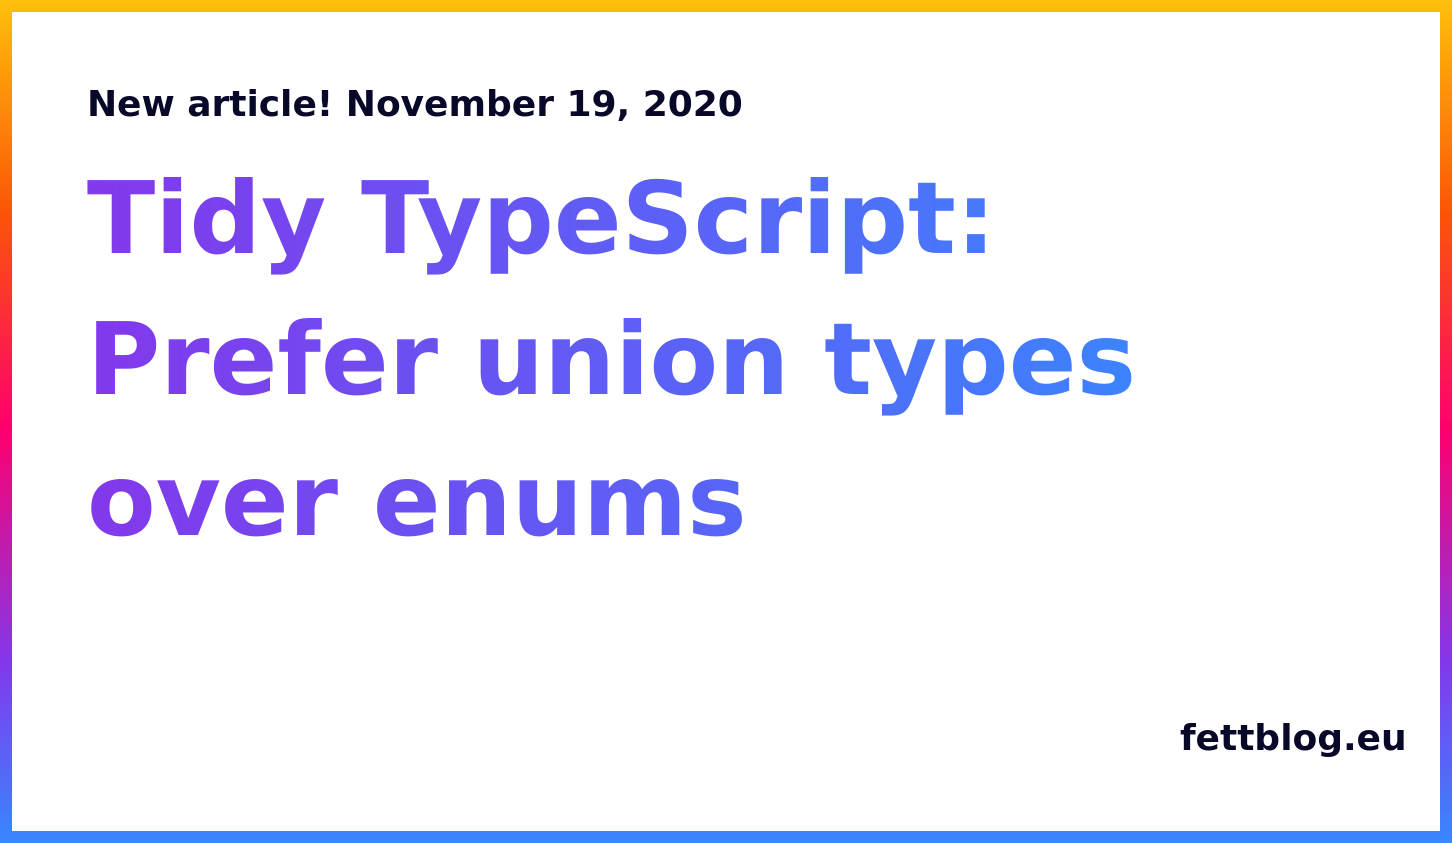 Tidy typescript avoid enums